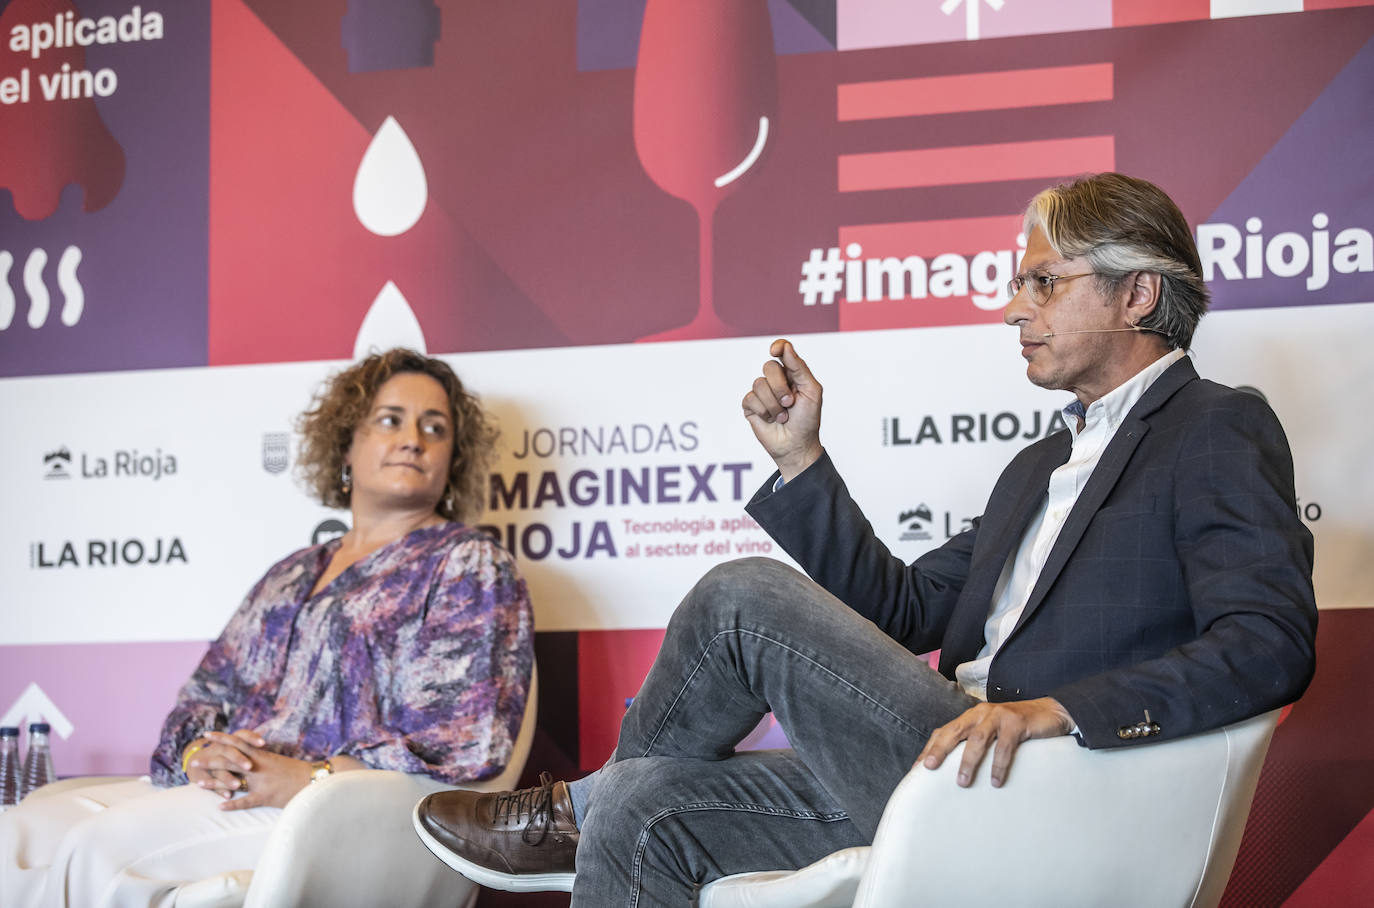 Imaginext Rioja, en imágenes